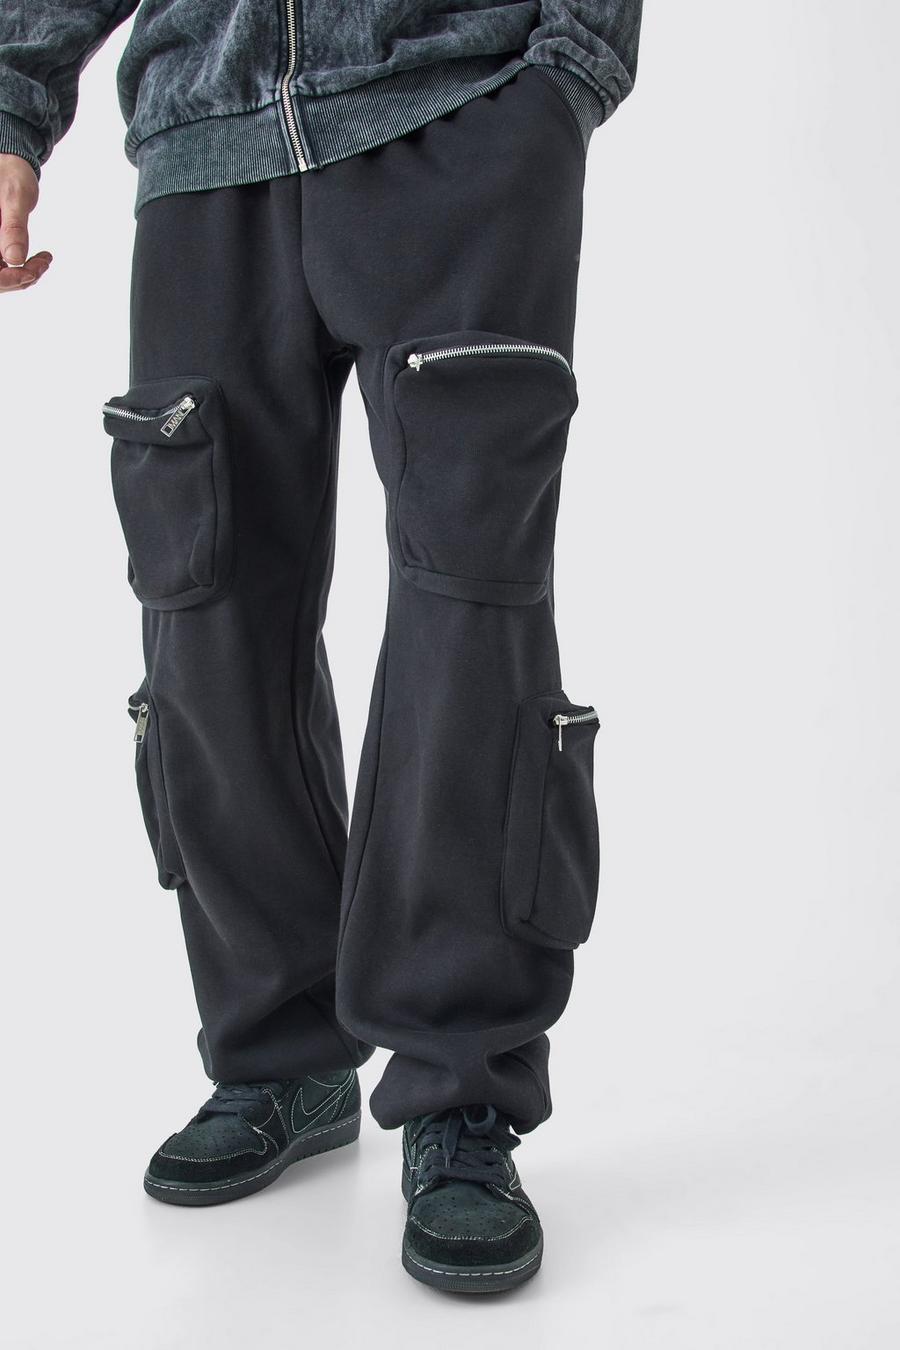 Pantaloni tuta Tall stile Utility stile Cargo, Black